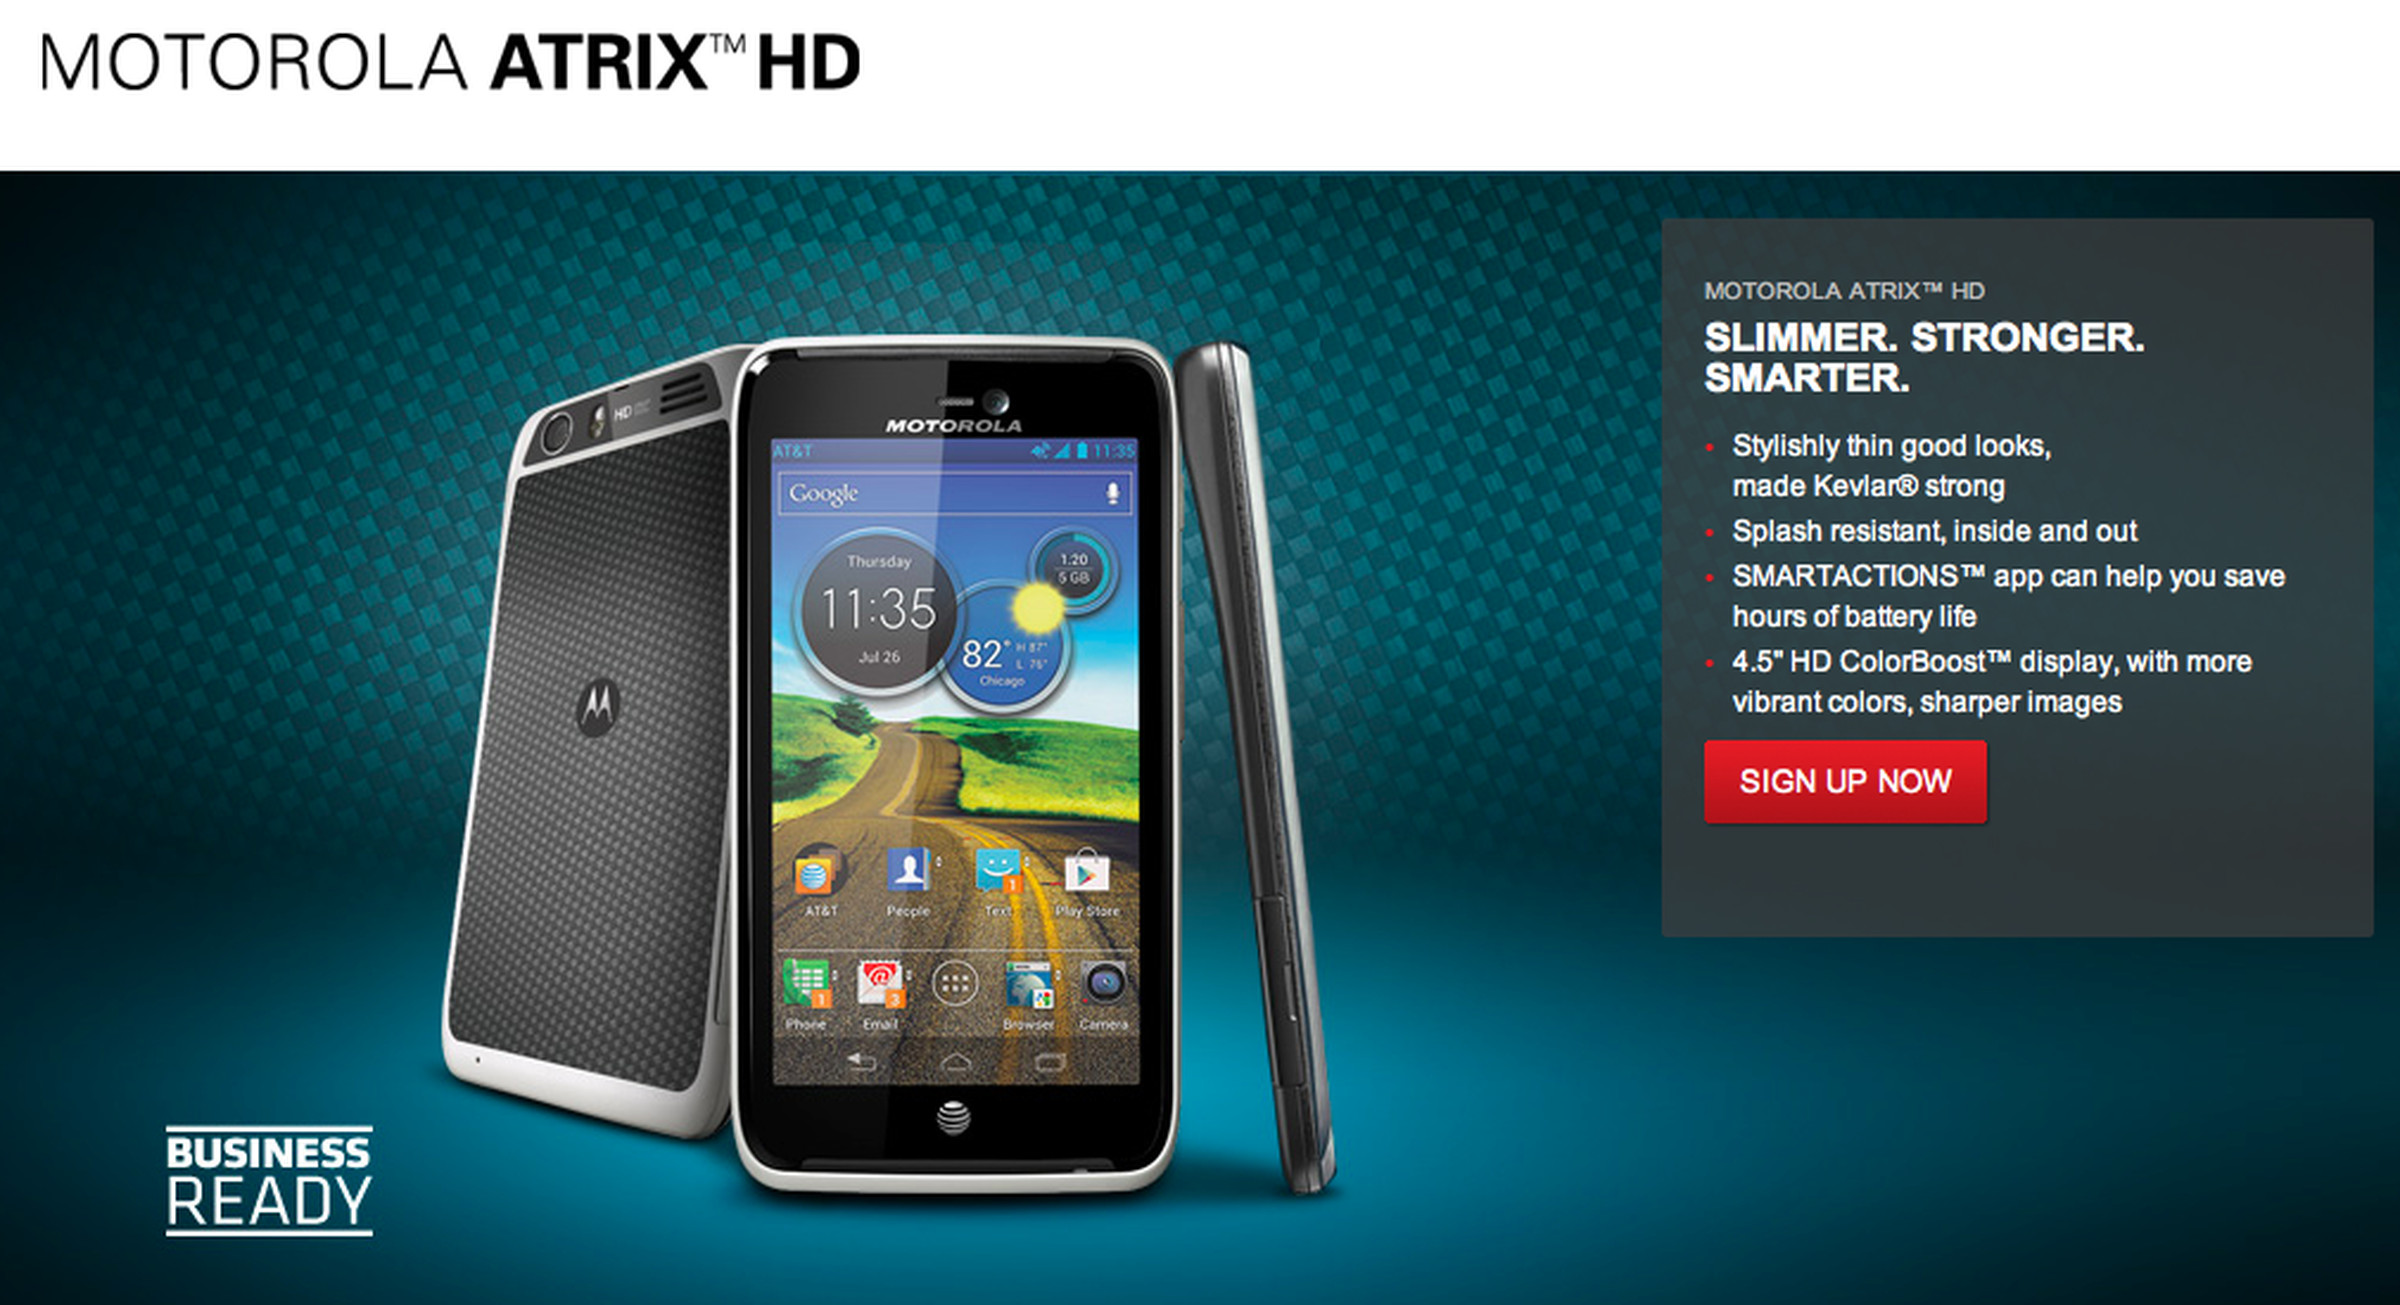 Motorola Atrix HD pictures, features, and specs